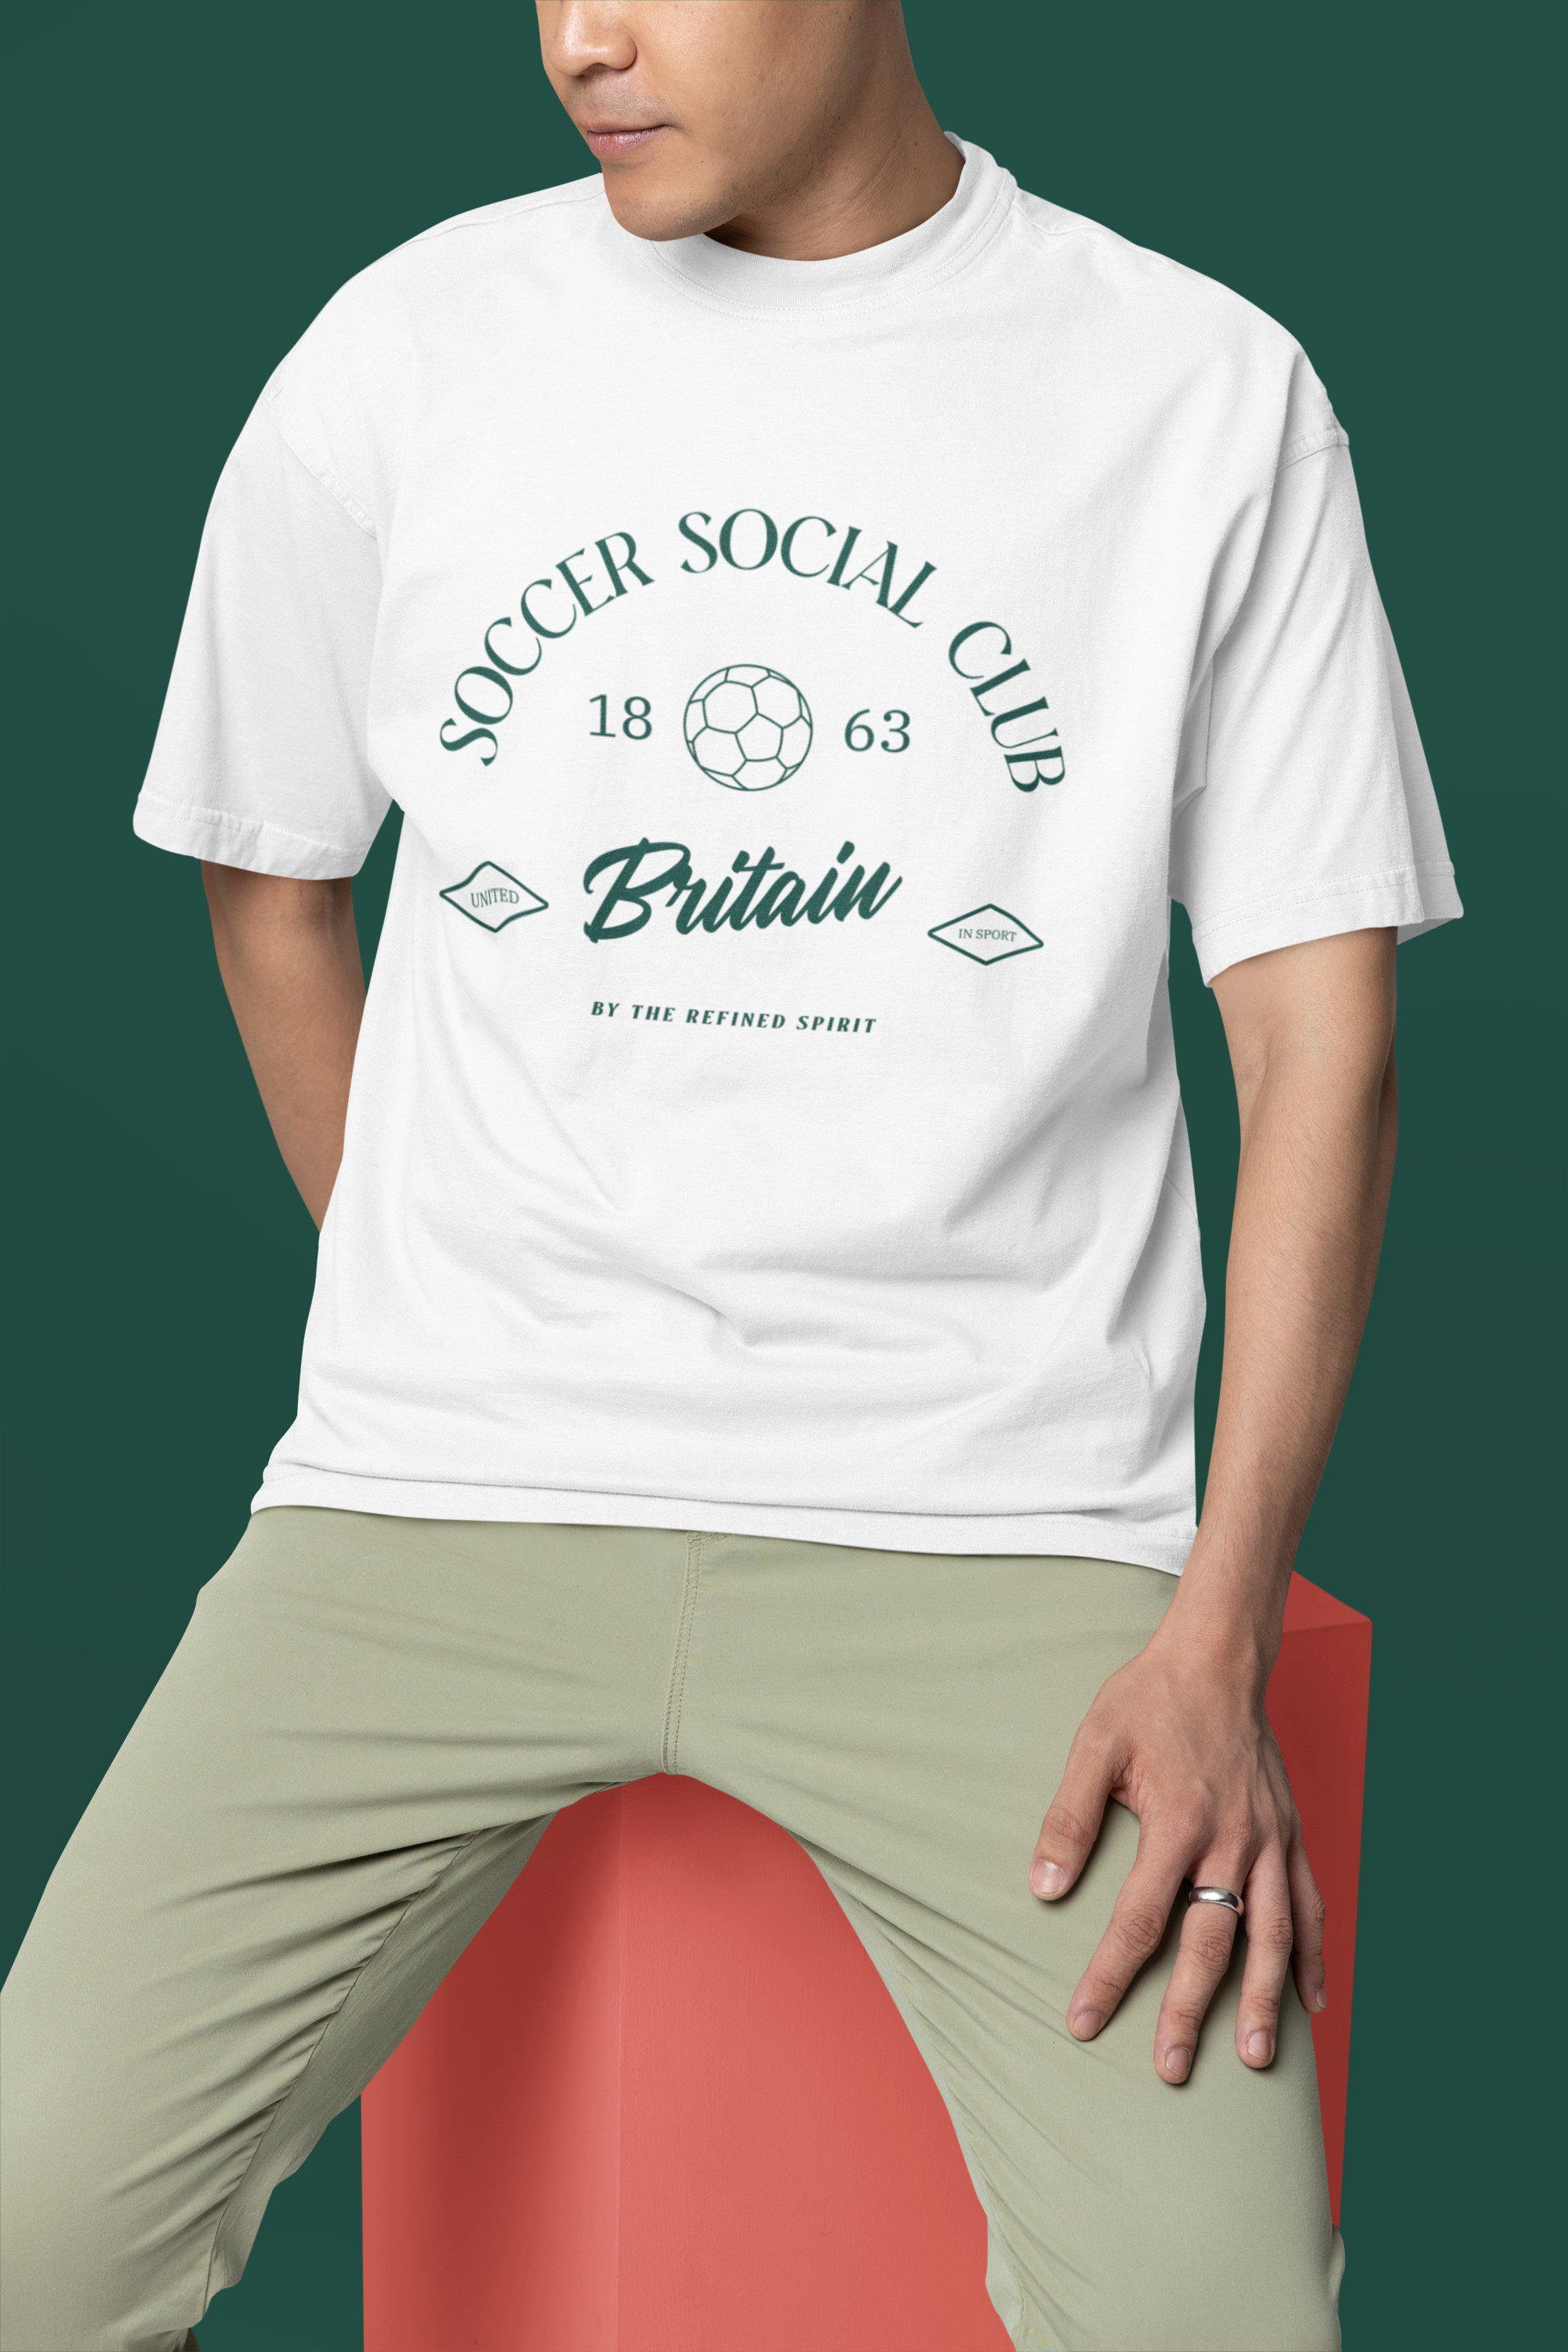 Soccer Social Club - Organic T-shirt